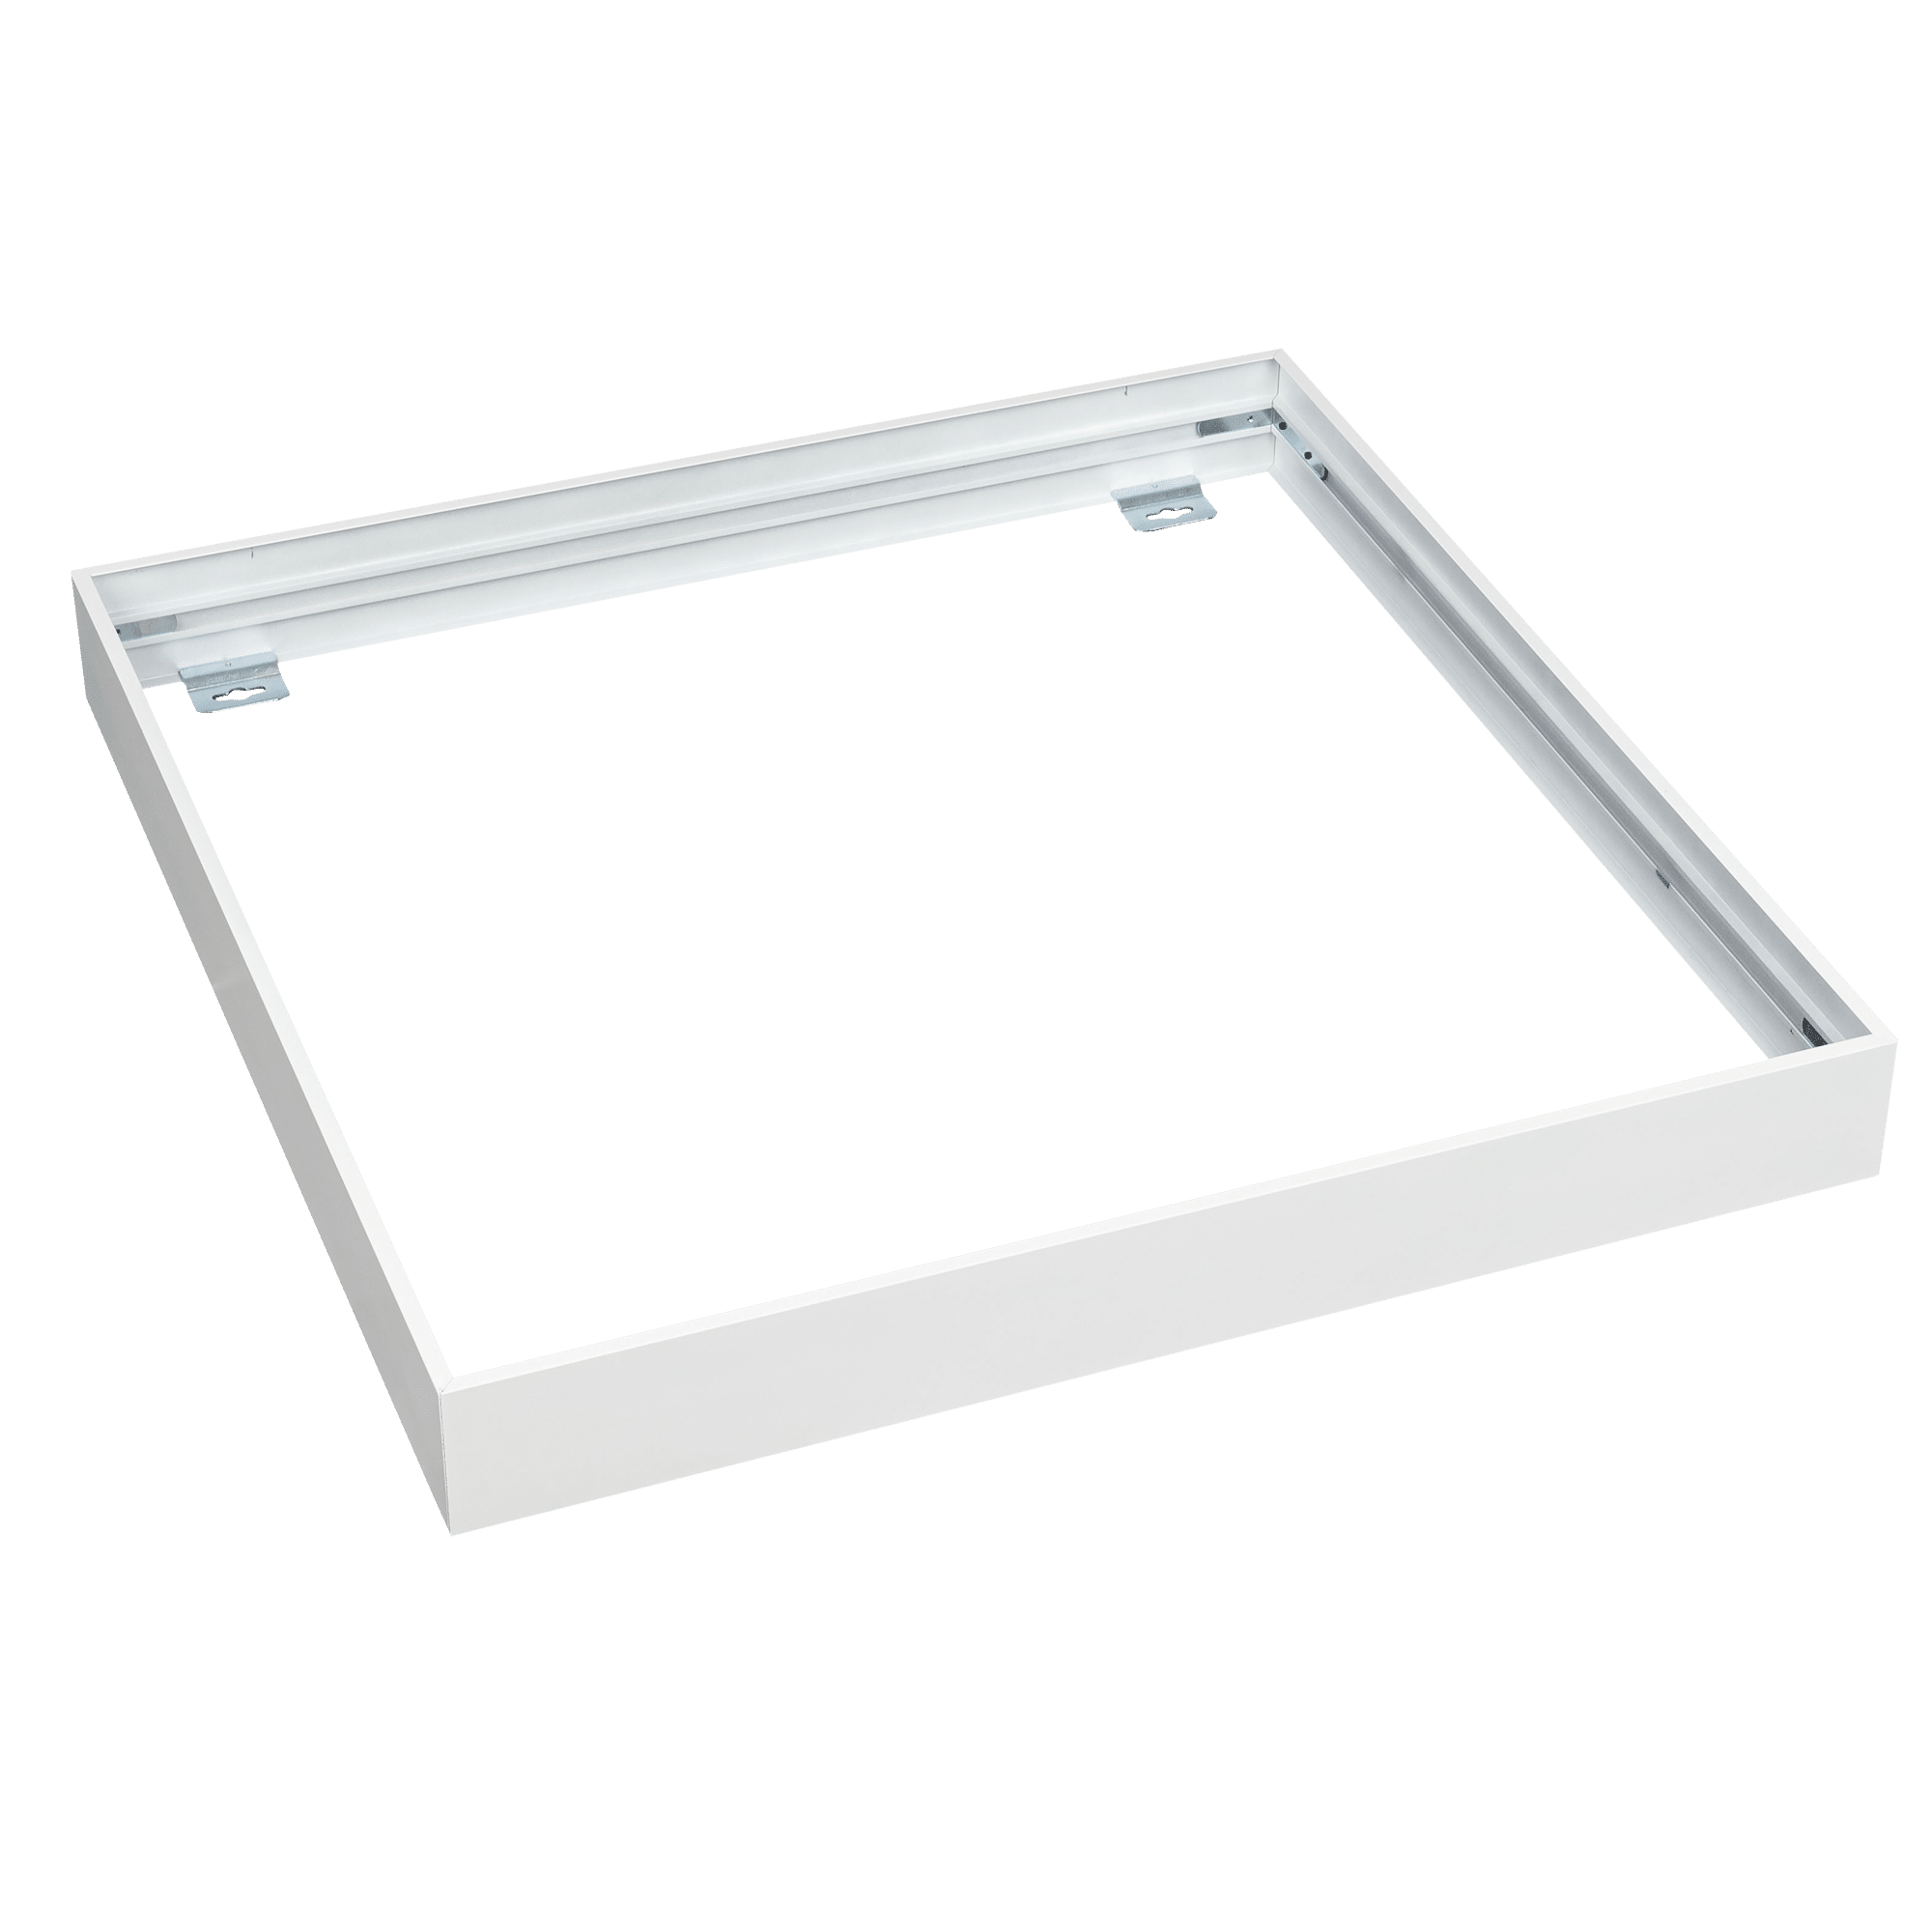 Mounting frame for Argos LED Panel - Onlinediscowinkel.nl